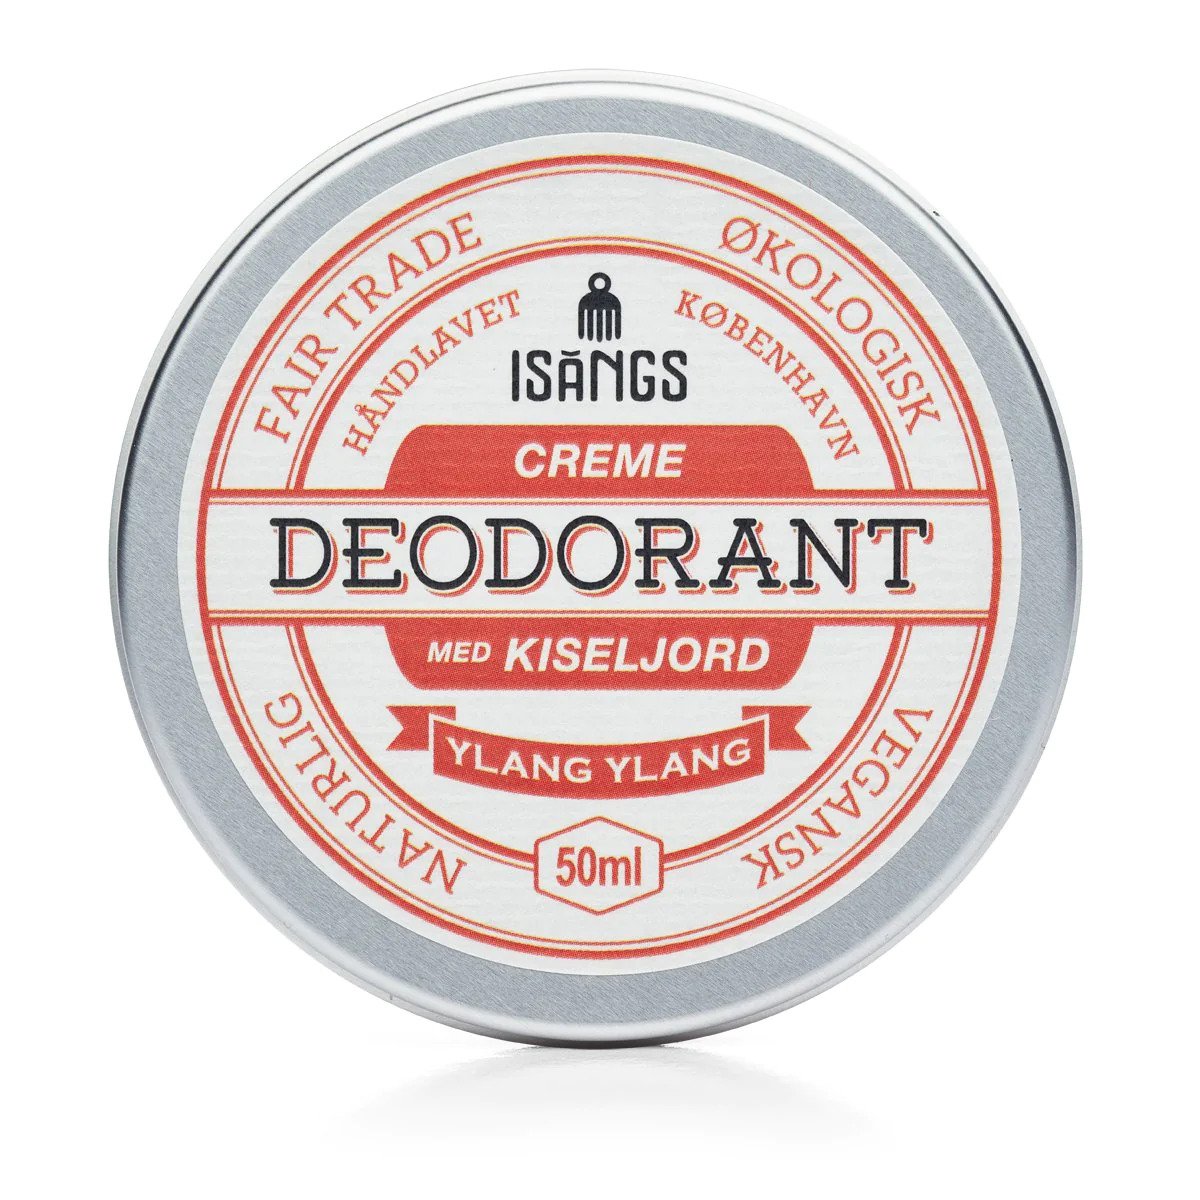 Creme deodorant med Kiseljord | Ylang Ylang